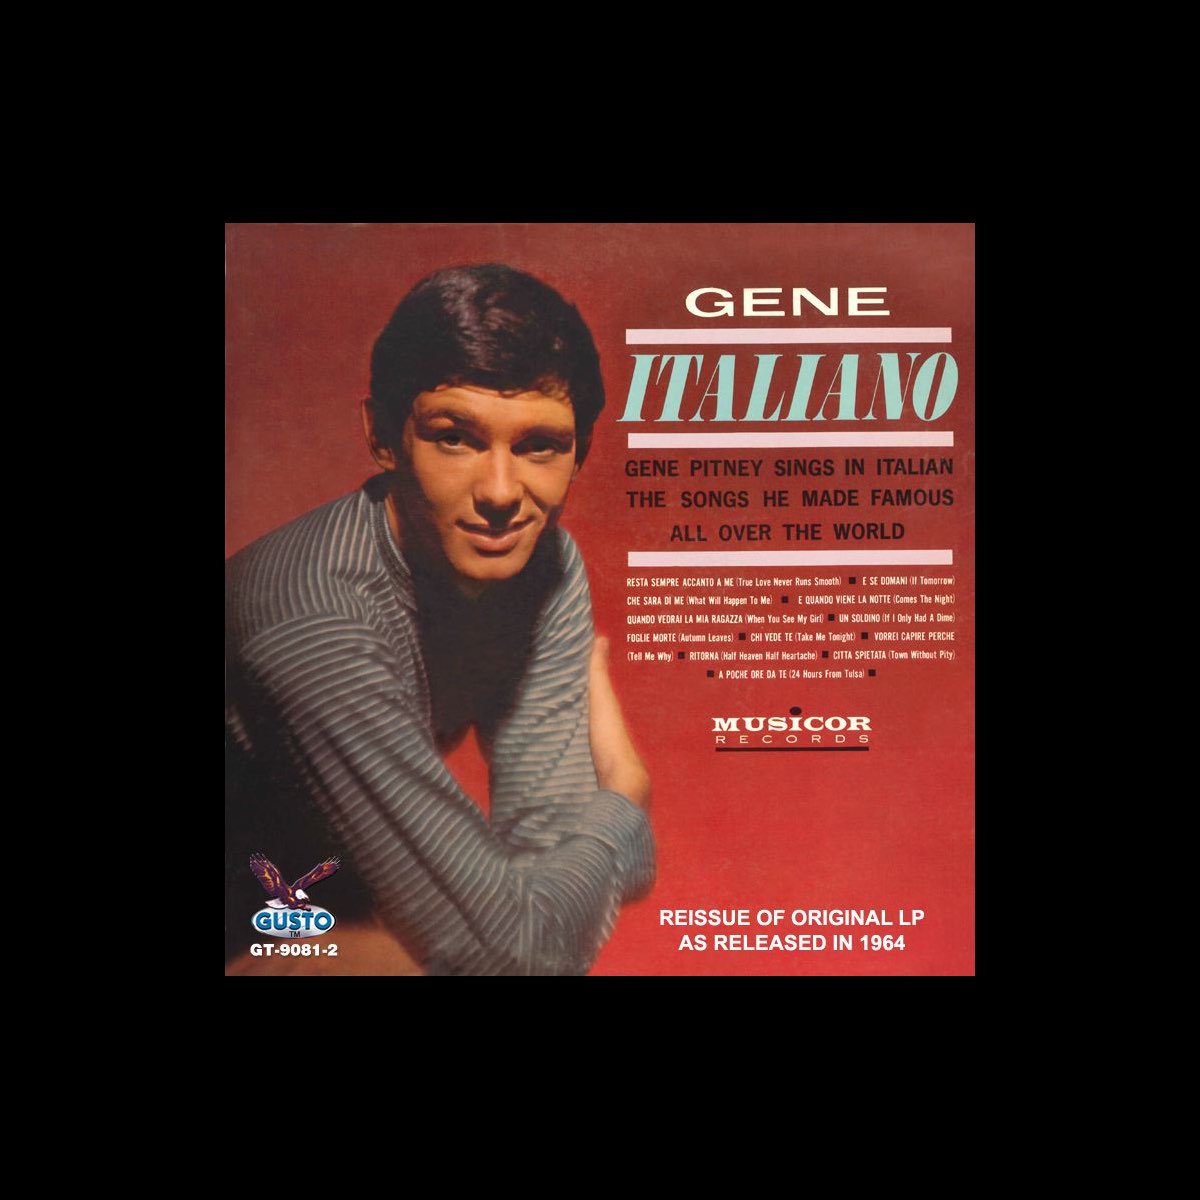 Italiano by Gene Pitney on Apple Music